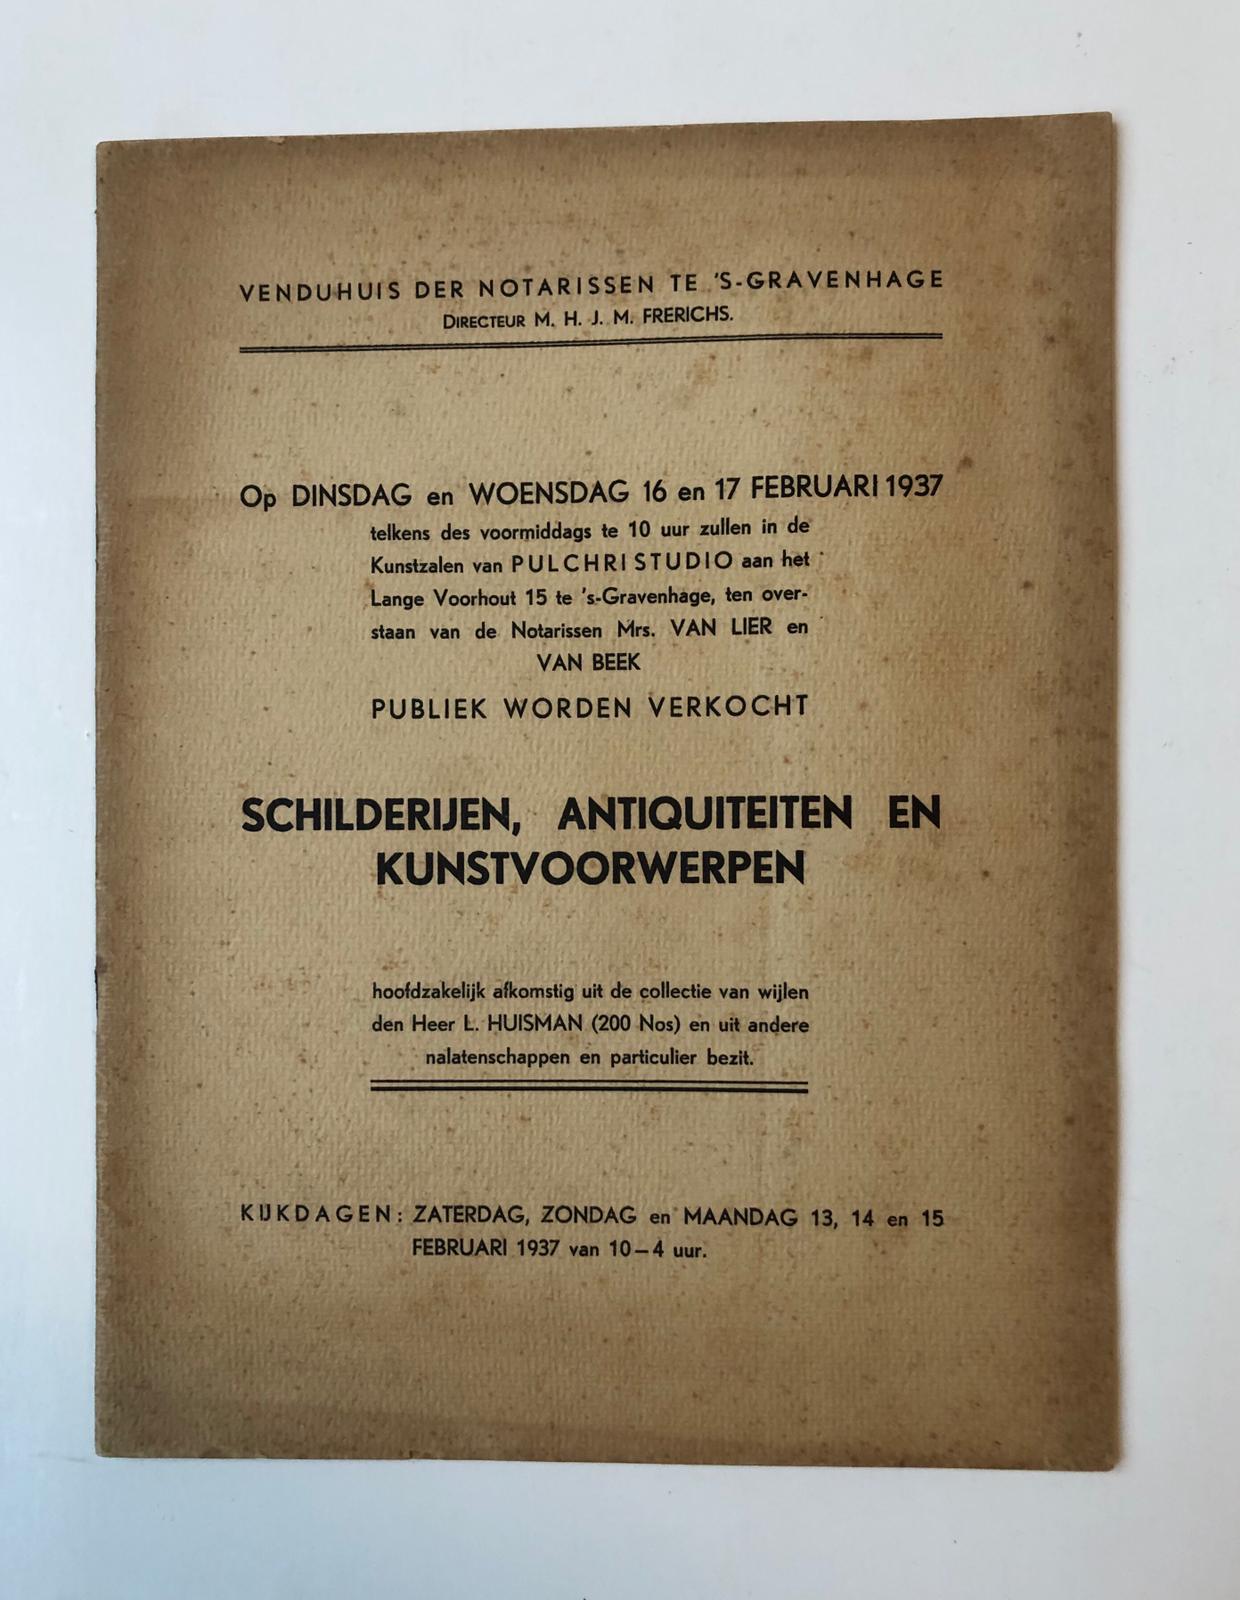  - HUISMAN Veilingcatalogus van Venduhuis s-Gravenhage 16-17-2-1937, collectie L. Huisman, gedrukt, 27 p., 4.